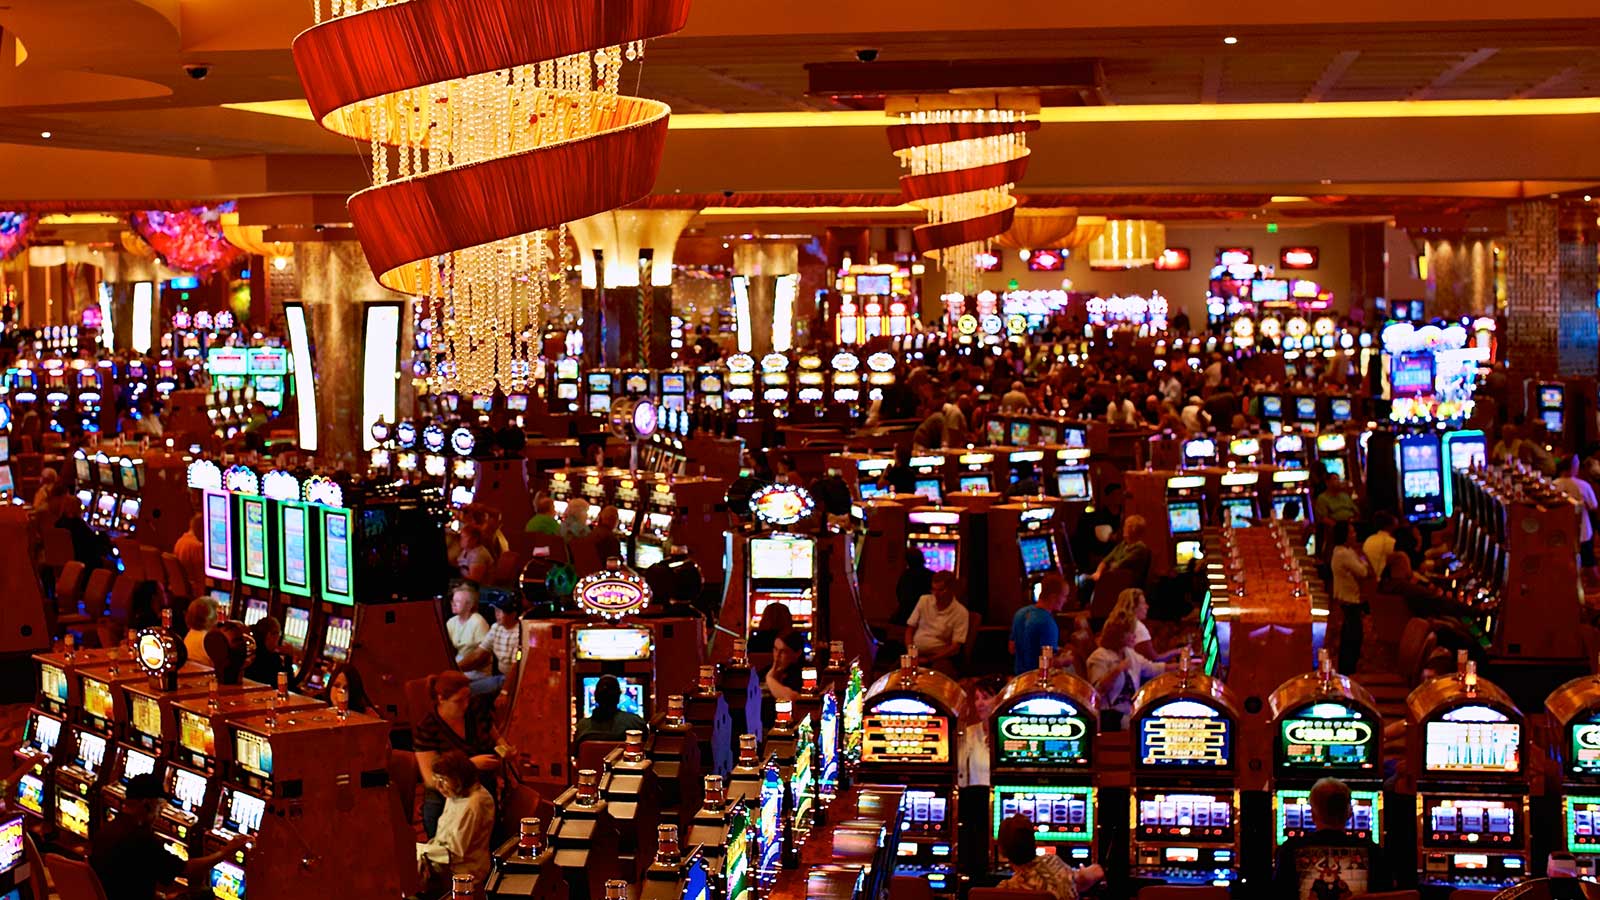 Jeux casino : une tradition familiale grotesque